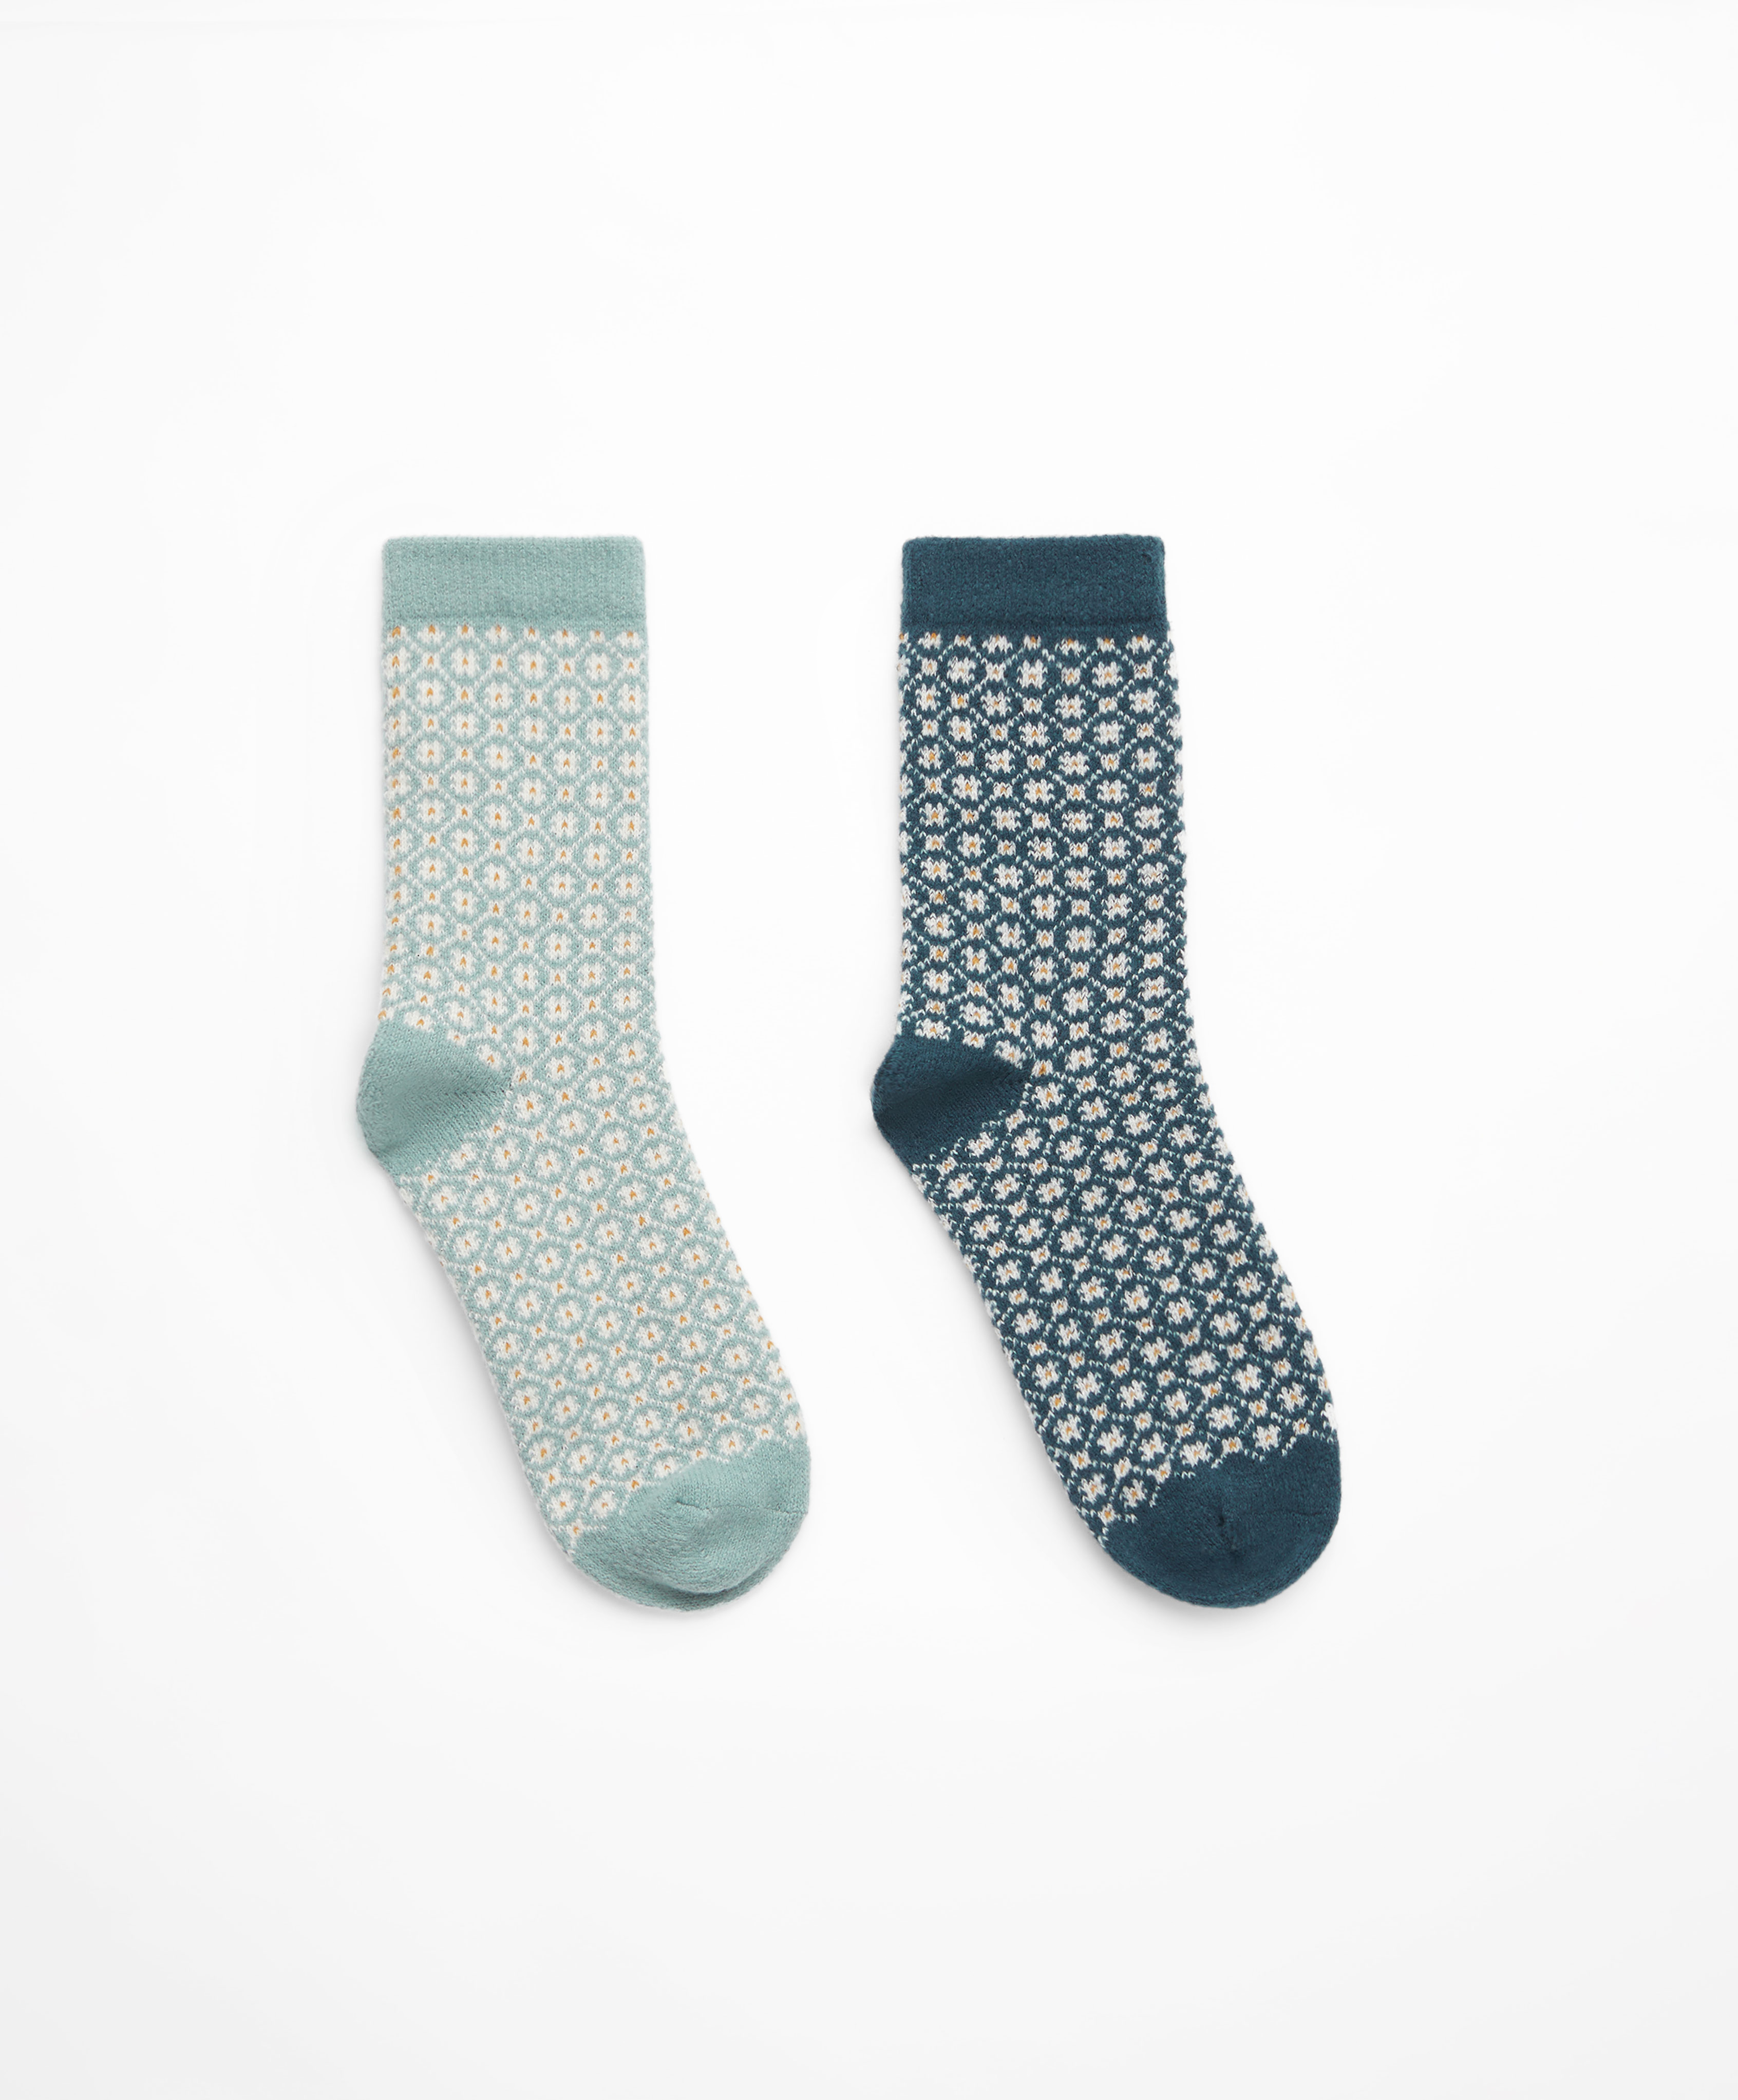 2 pairs of classic socks